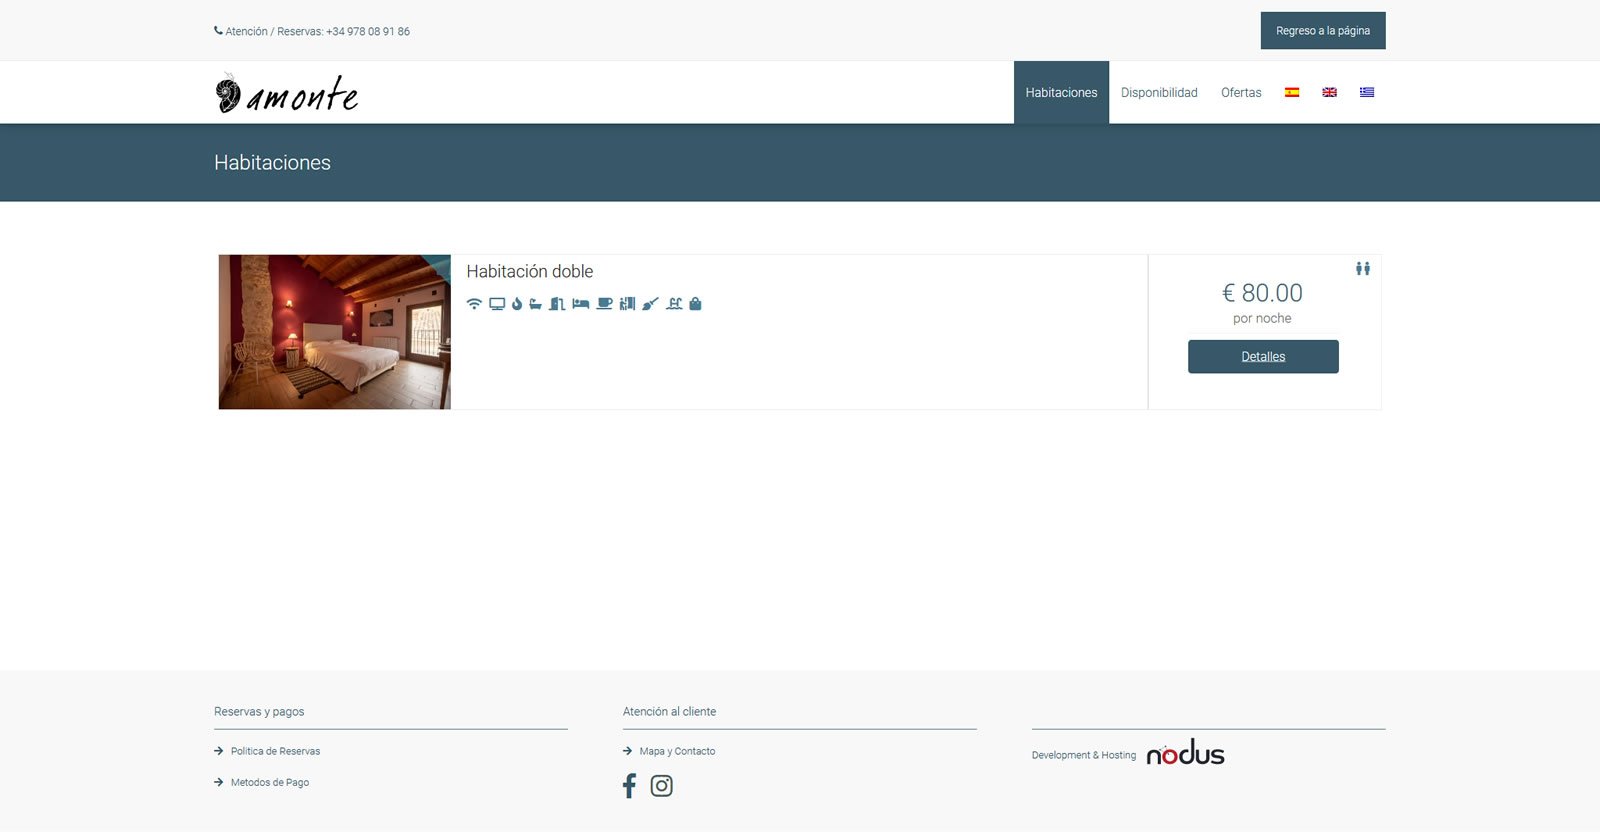 Nodus - Κατασκευή Ιστοσελίδων & E-shop